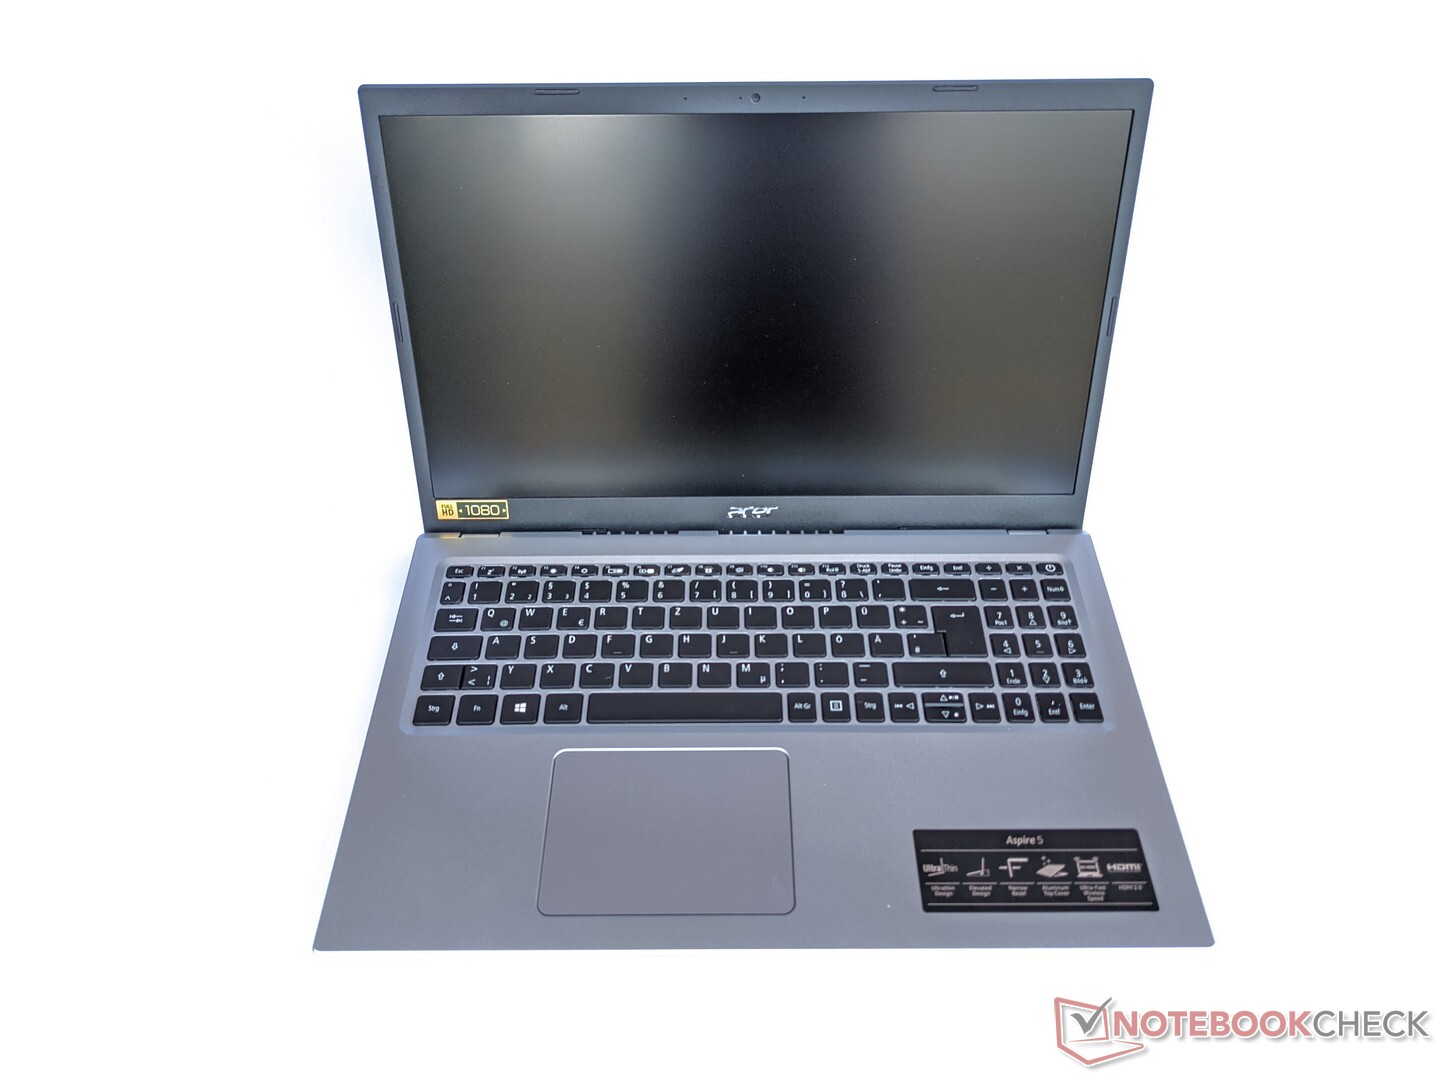 Ноутбук Acer I7 Цена